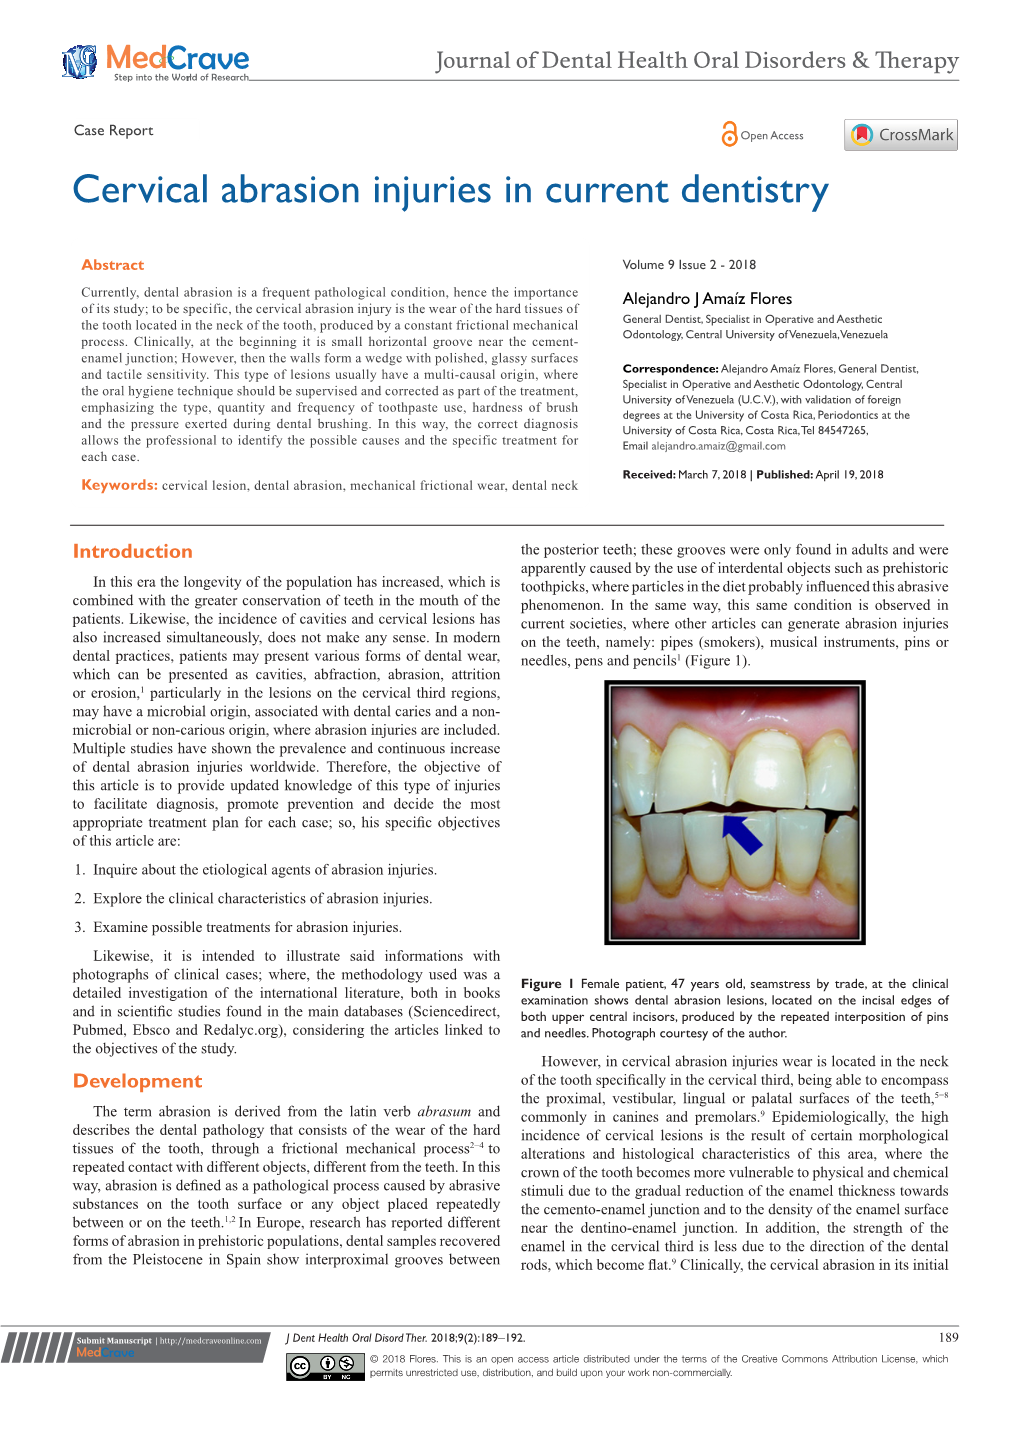 Cervical Abrasion Injuries in Current Dentistry